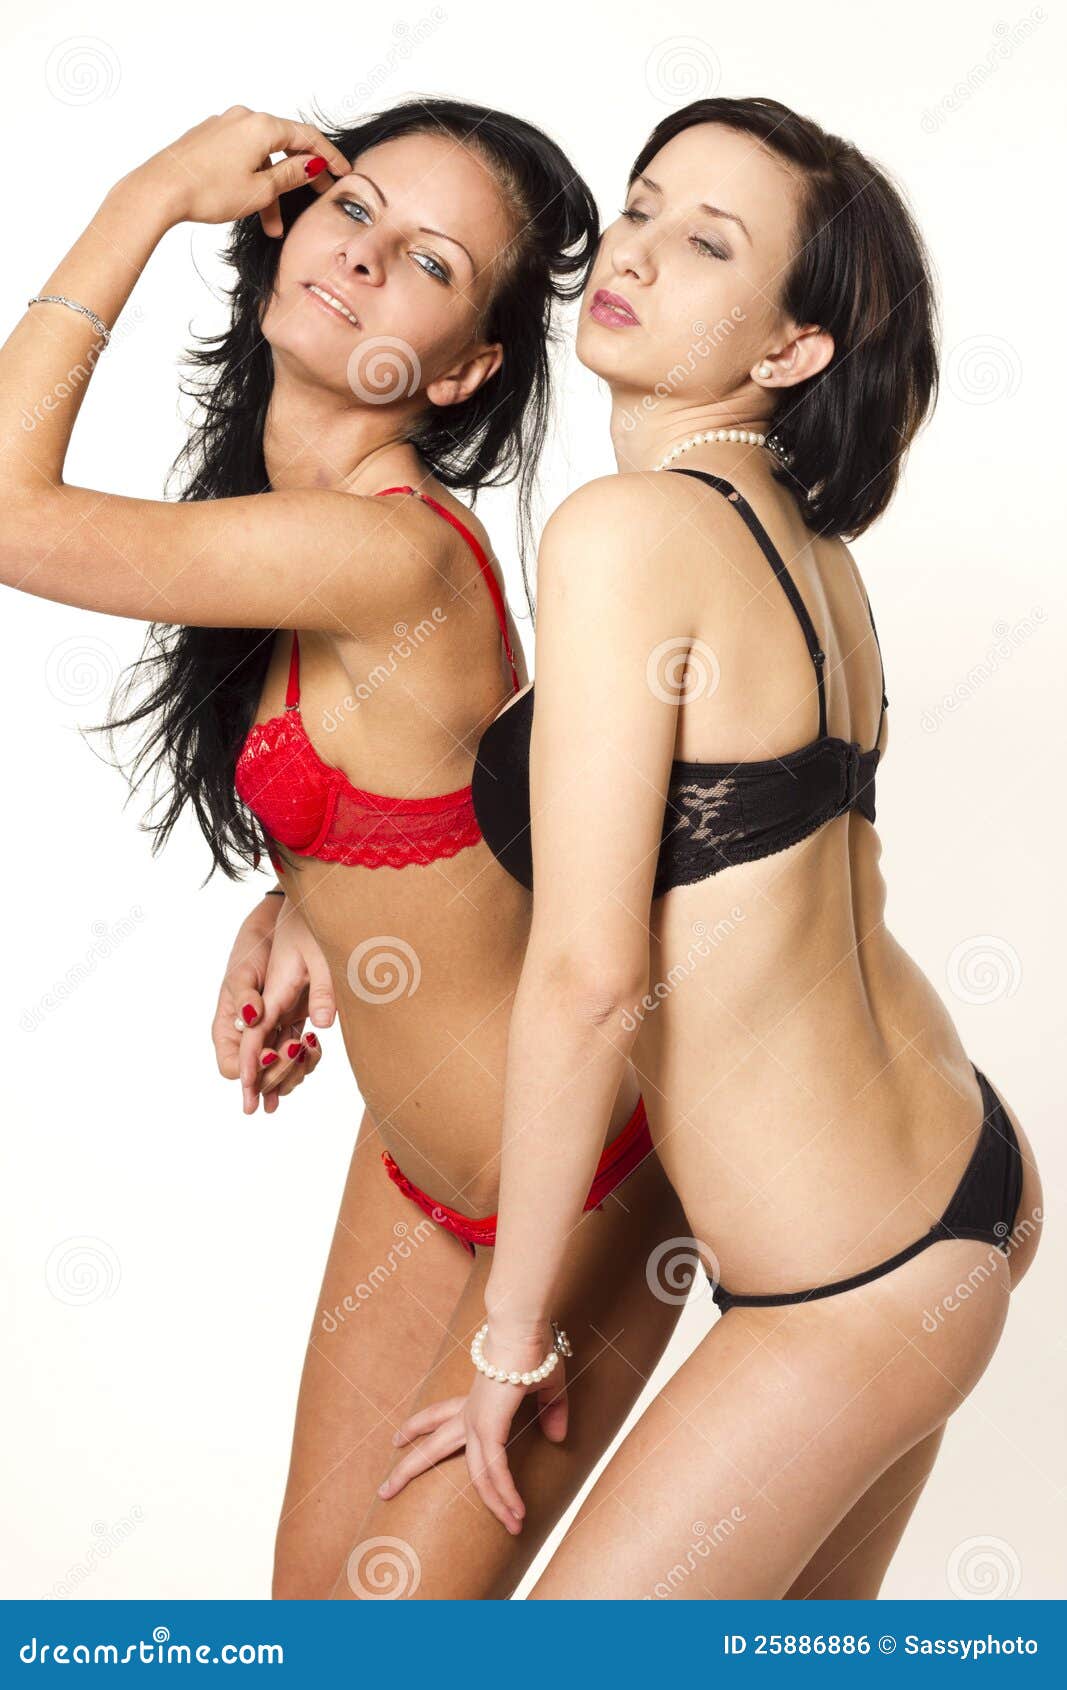 andy wray add hot lesbians in underwear photo